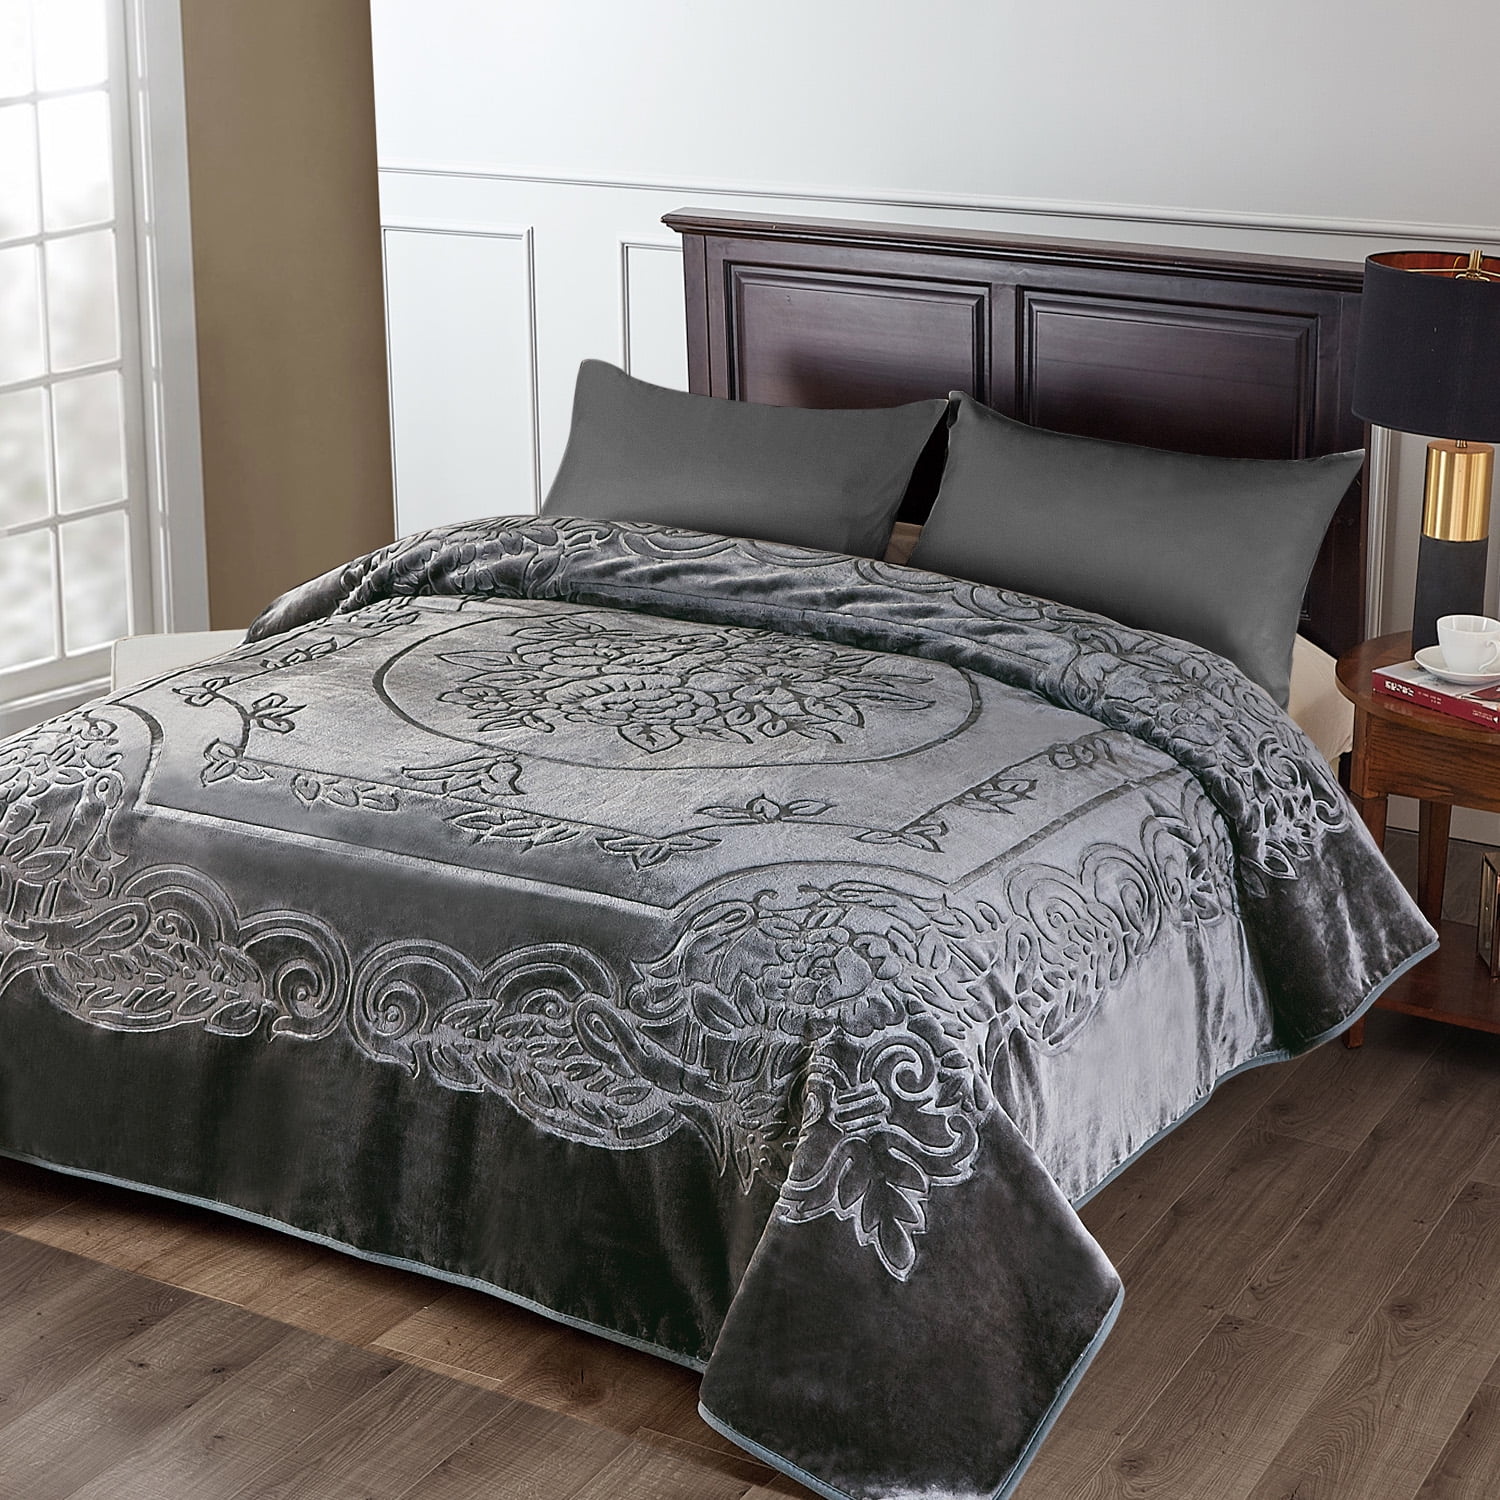 Luxury Soft Micro Plush Warm Thick Fleece Blanket Premium Embossed Floral Bed Blanket